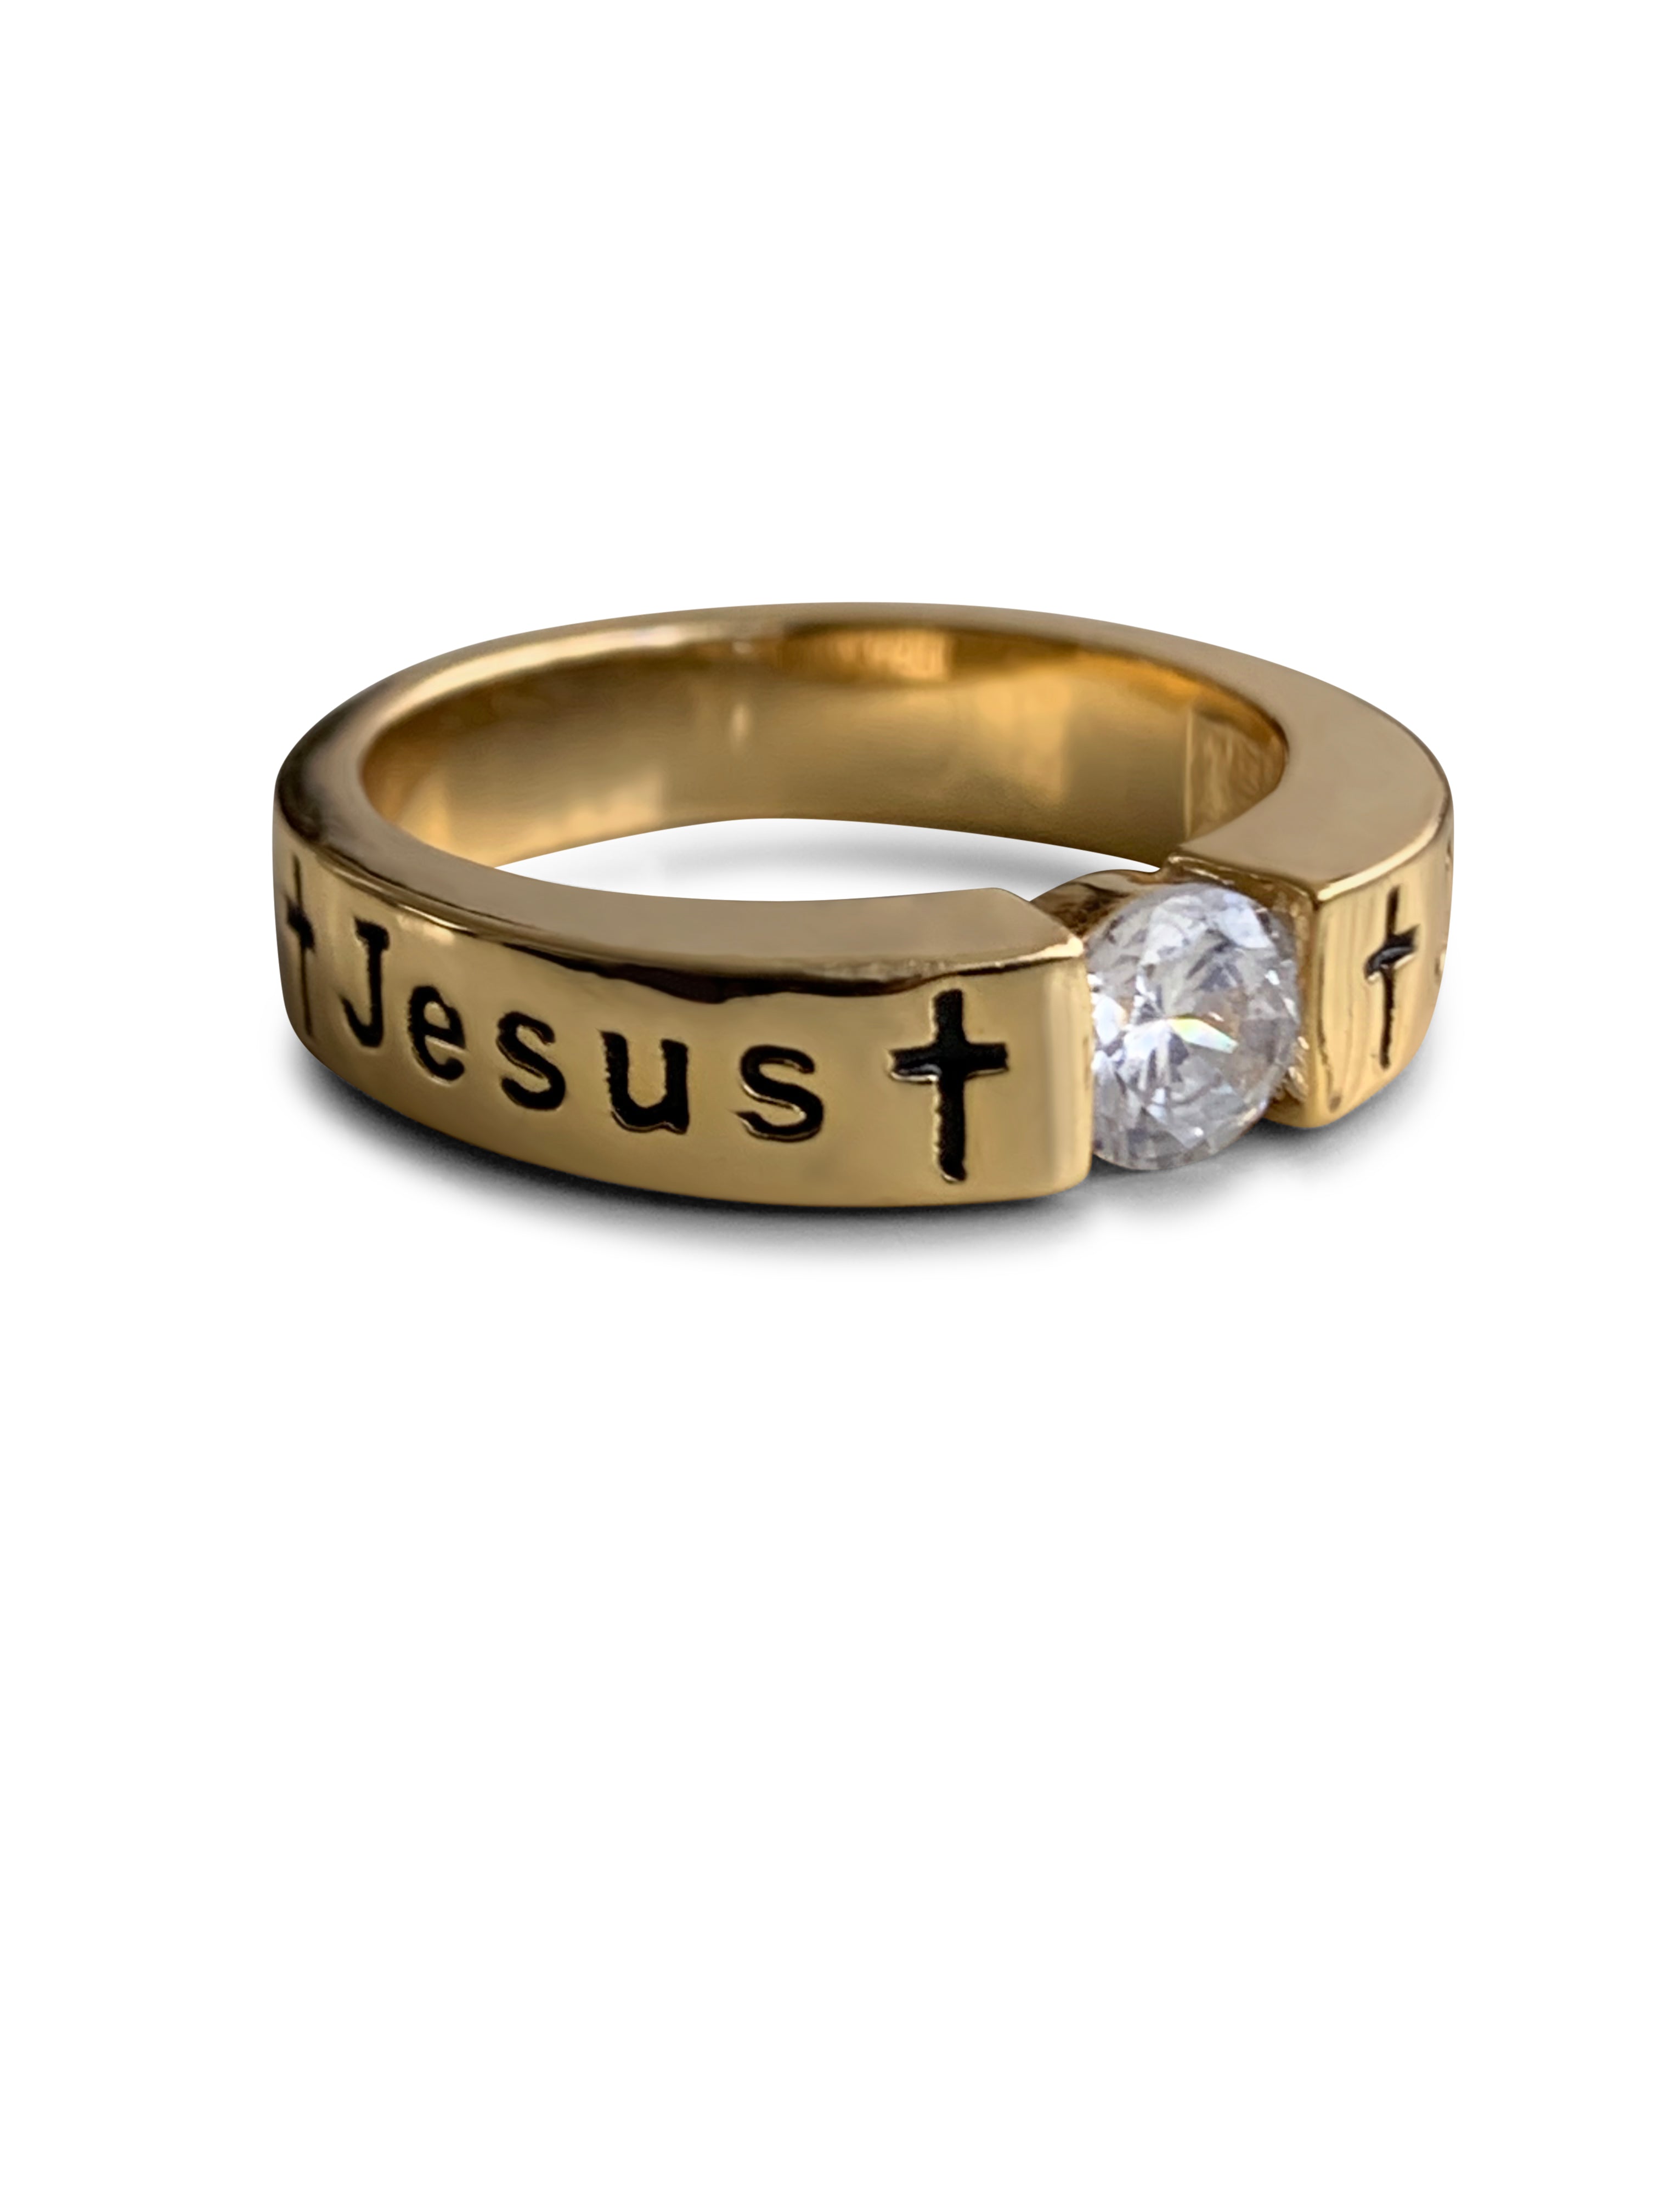 Jesus Ichthus Ring in 14K Yellow Gold